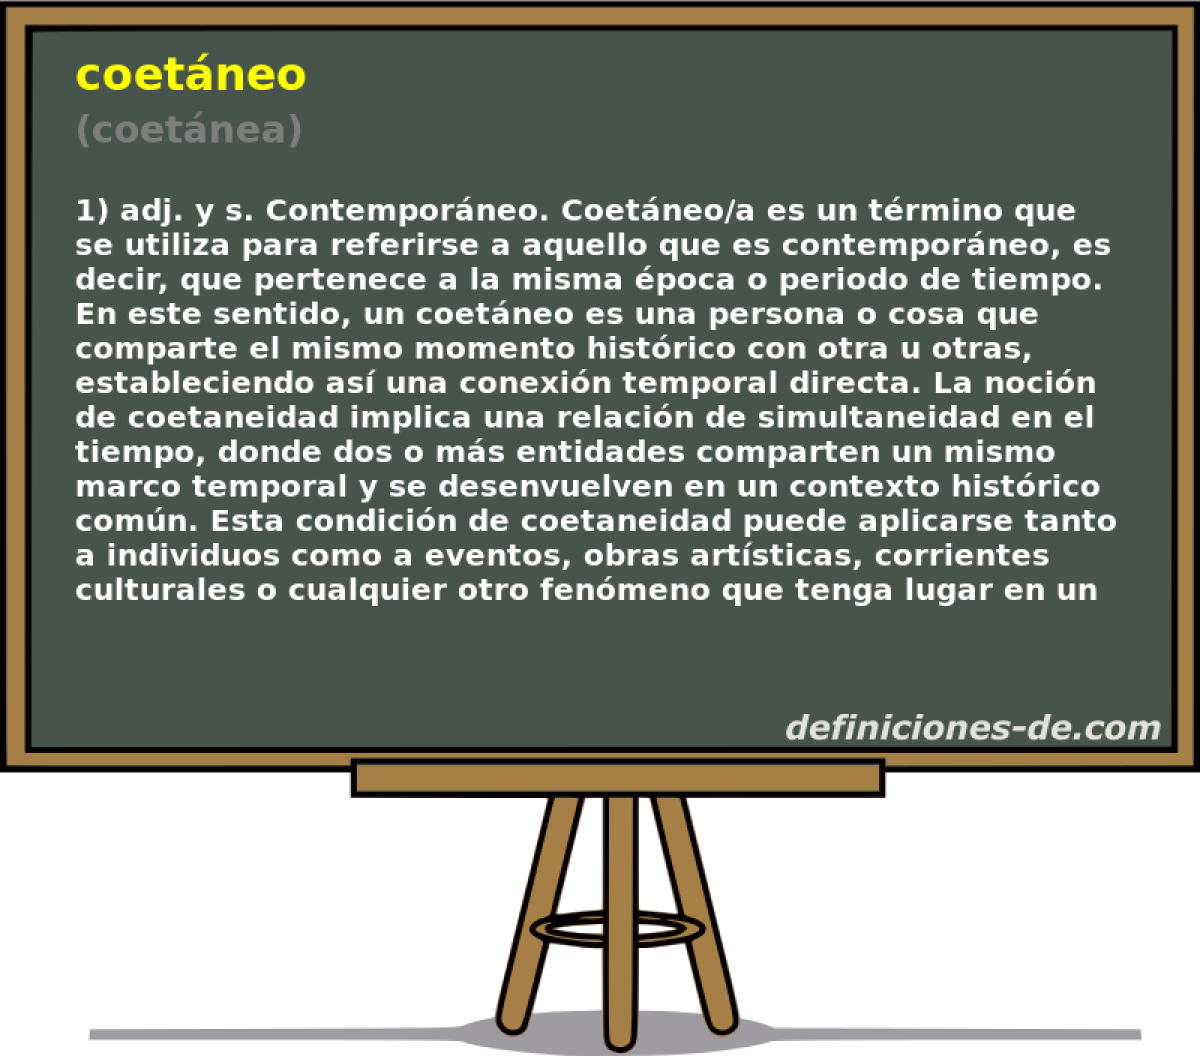 coetneo (coetnea)